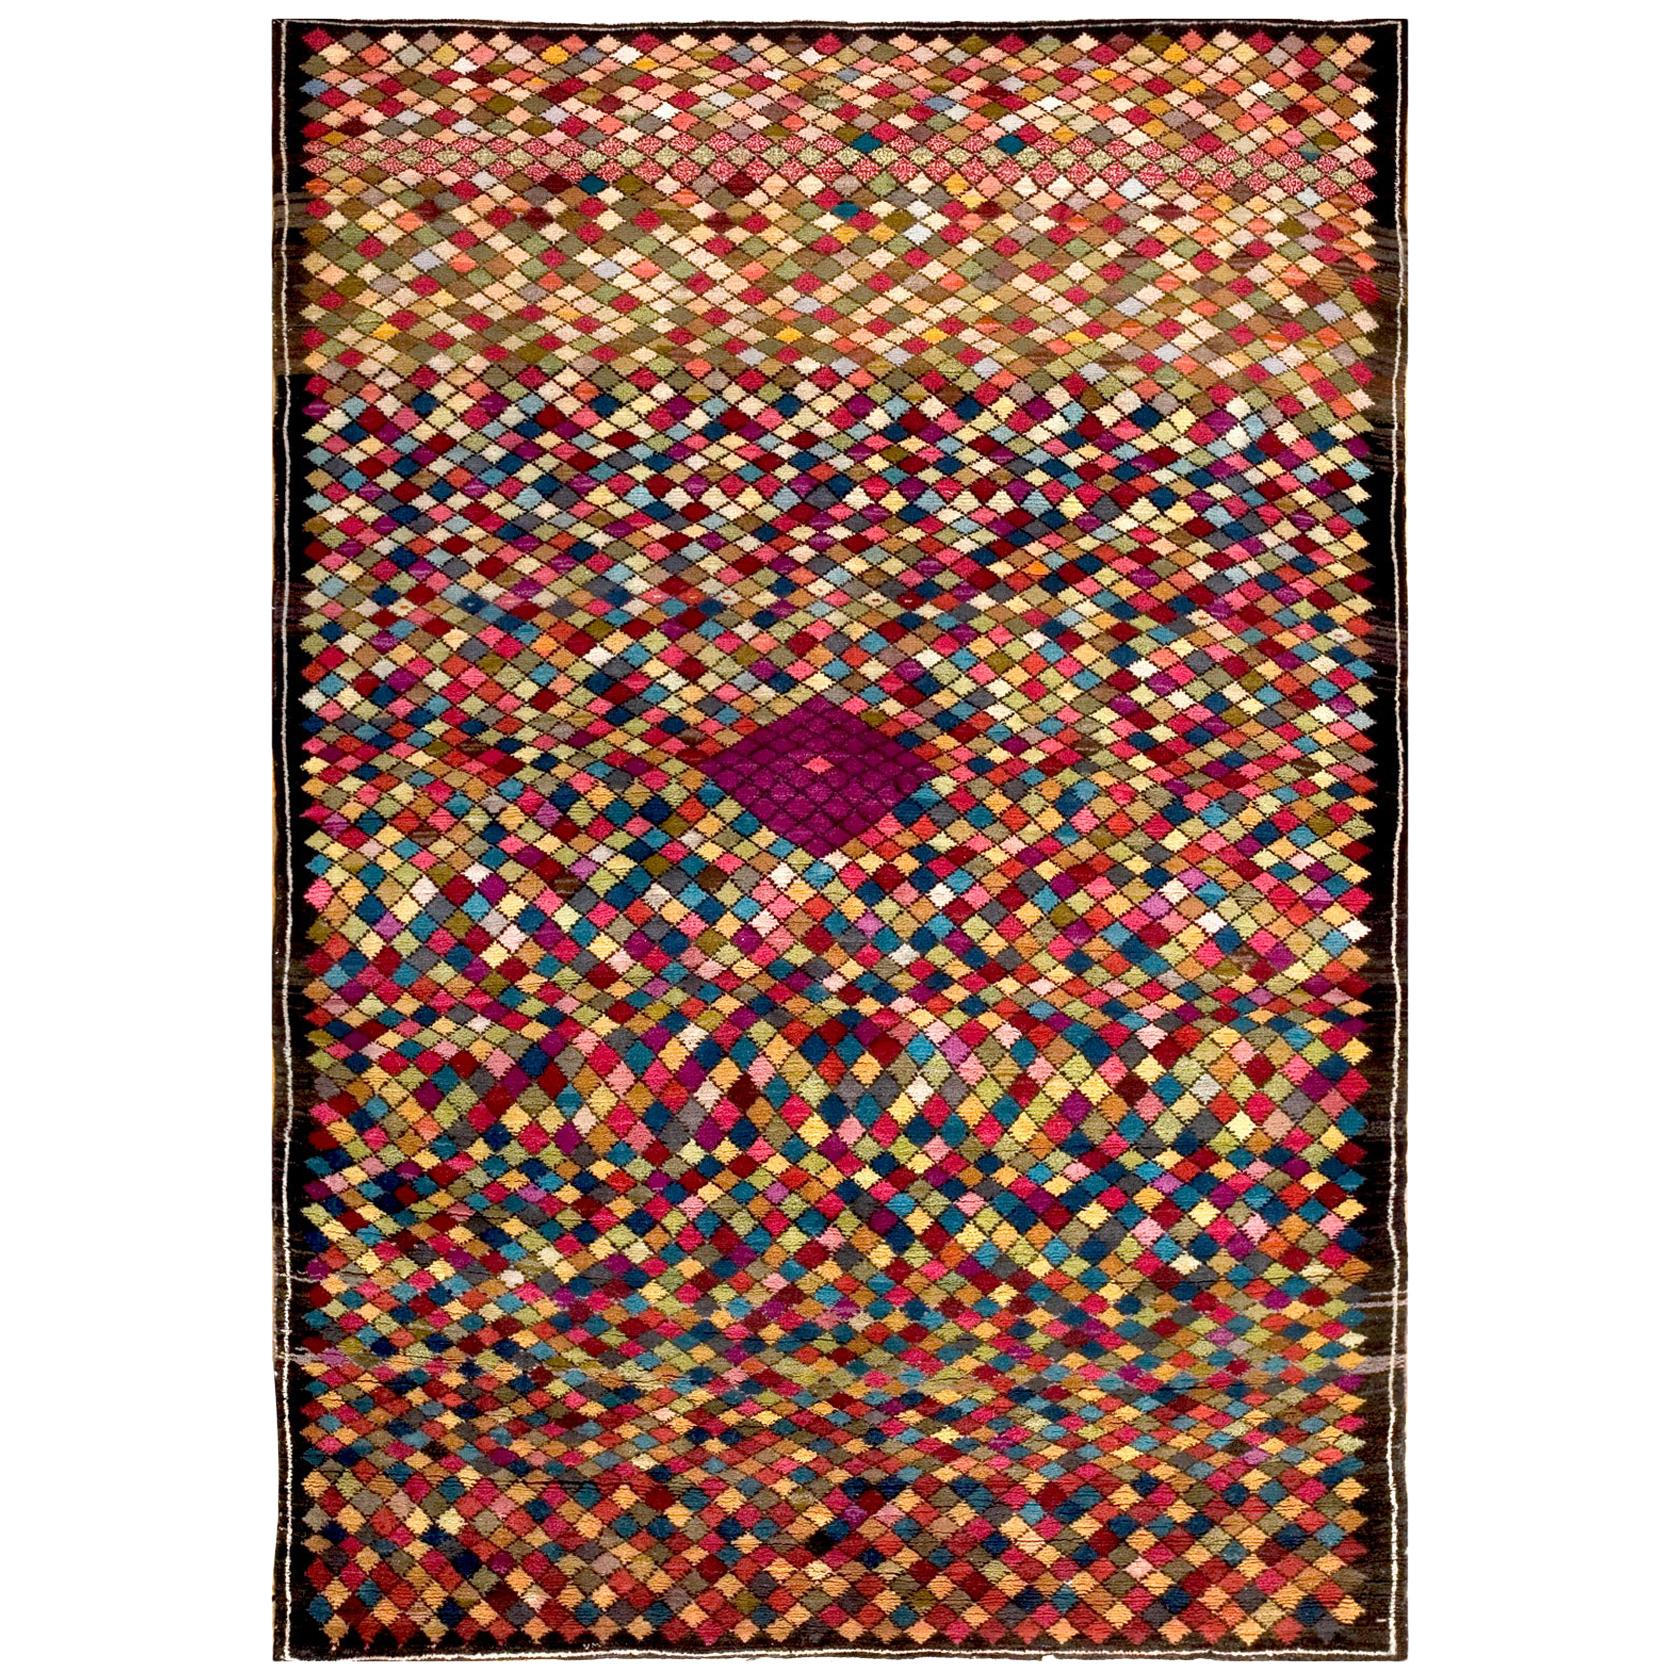 Early 20th Century Jerusalem Carpet ( 4'11" x 7' - 150 x 213 )